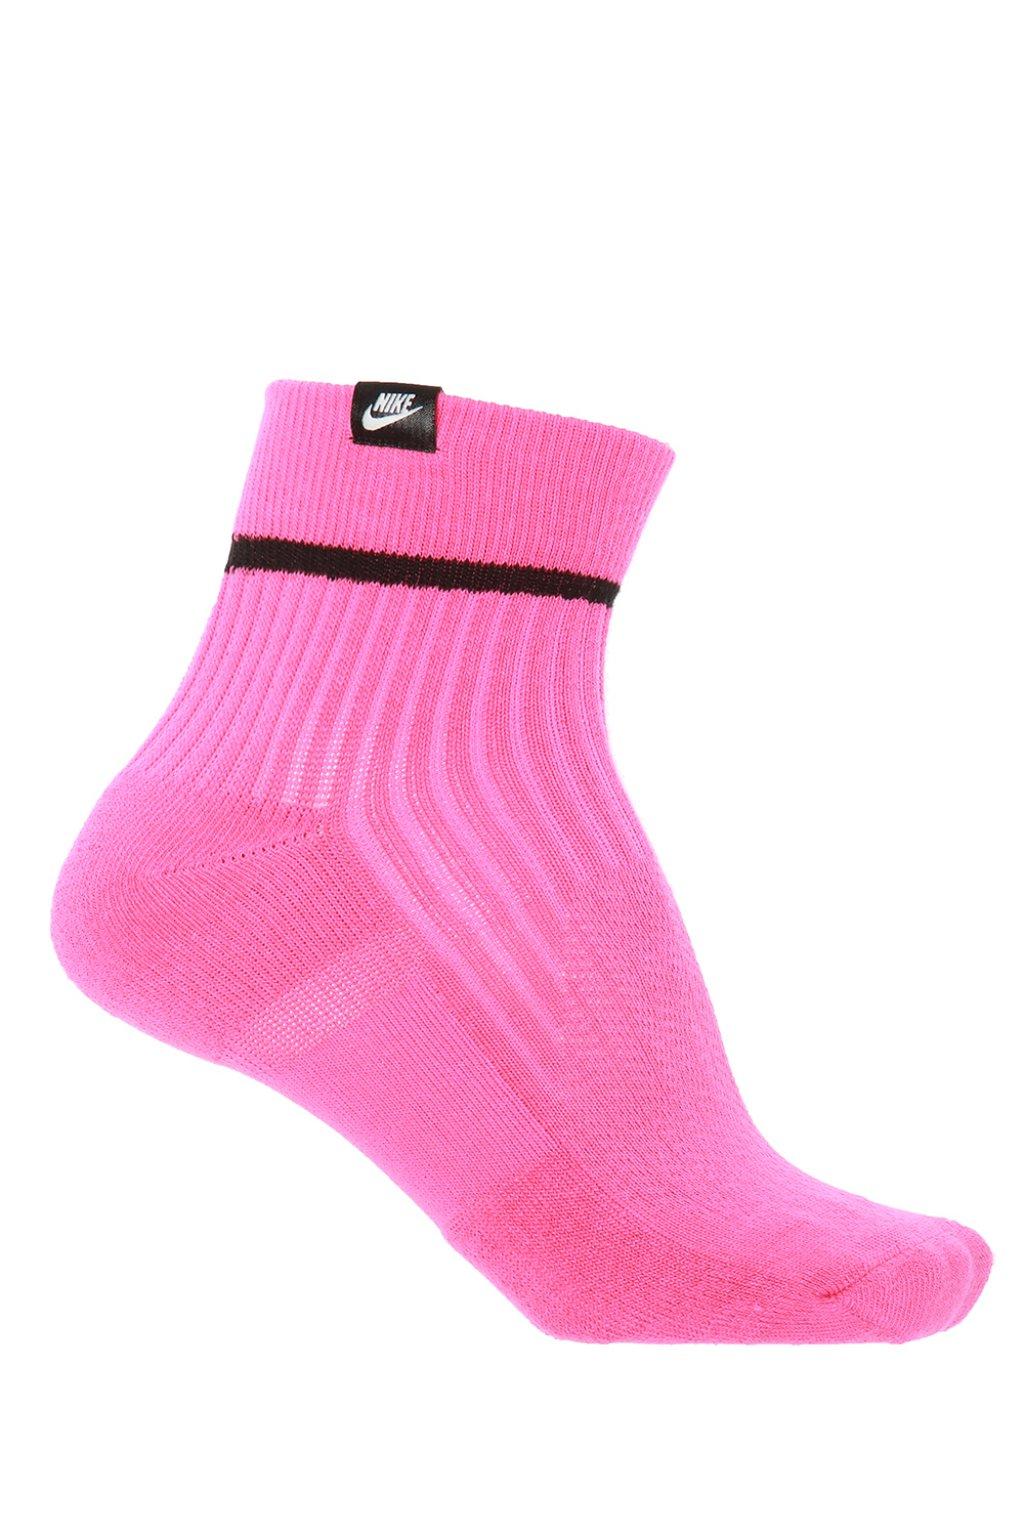 global Inclinado Giro de vuelta Nike Hi-vis Neon Socks for Men | Lyst